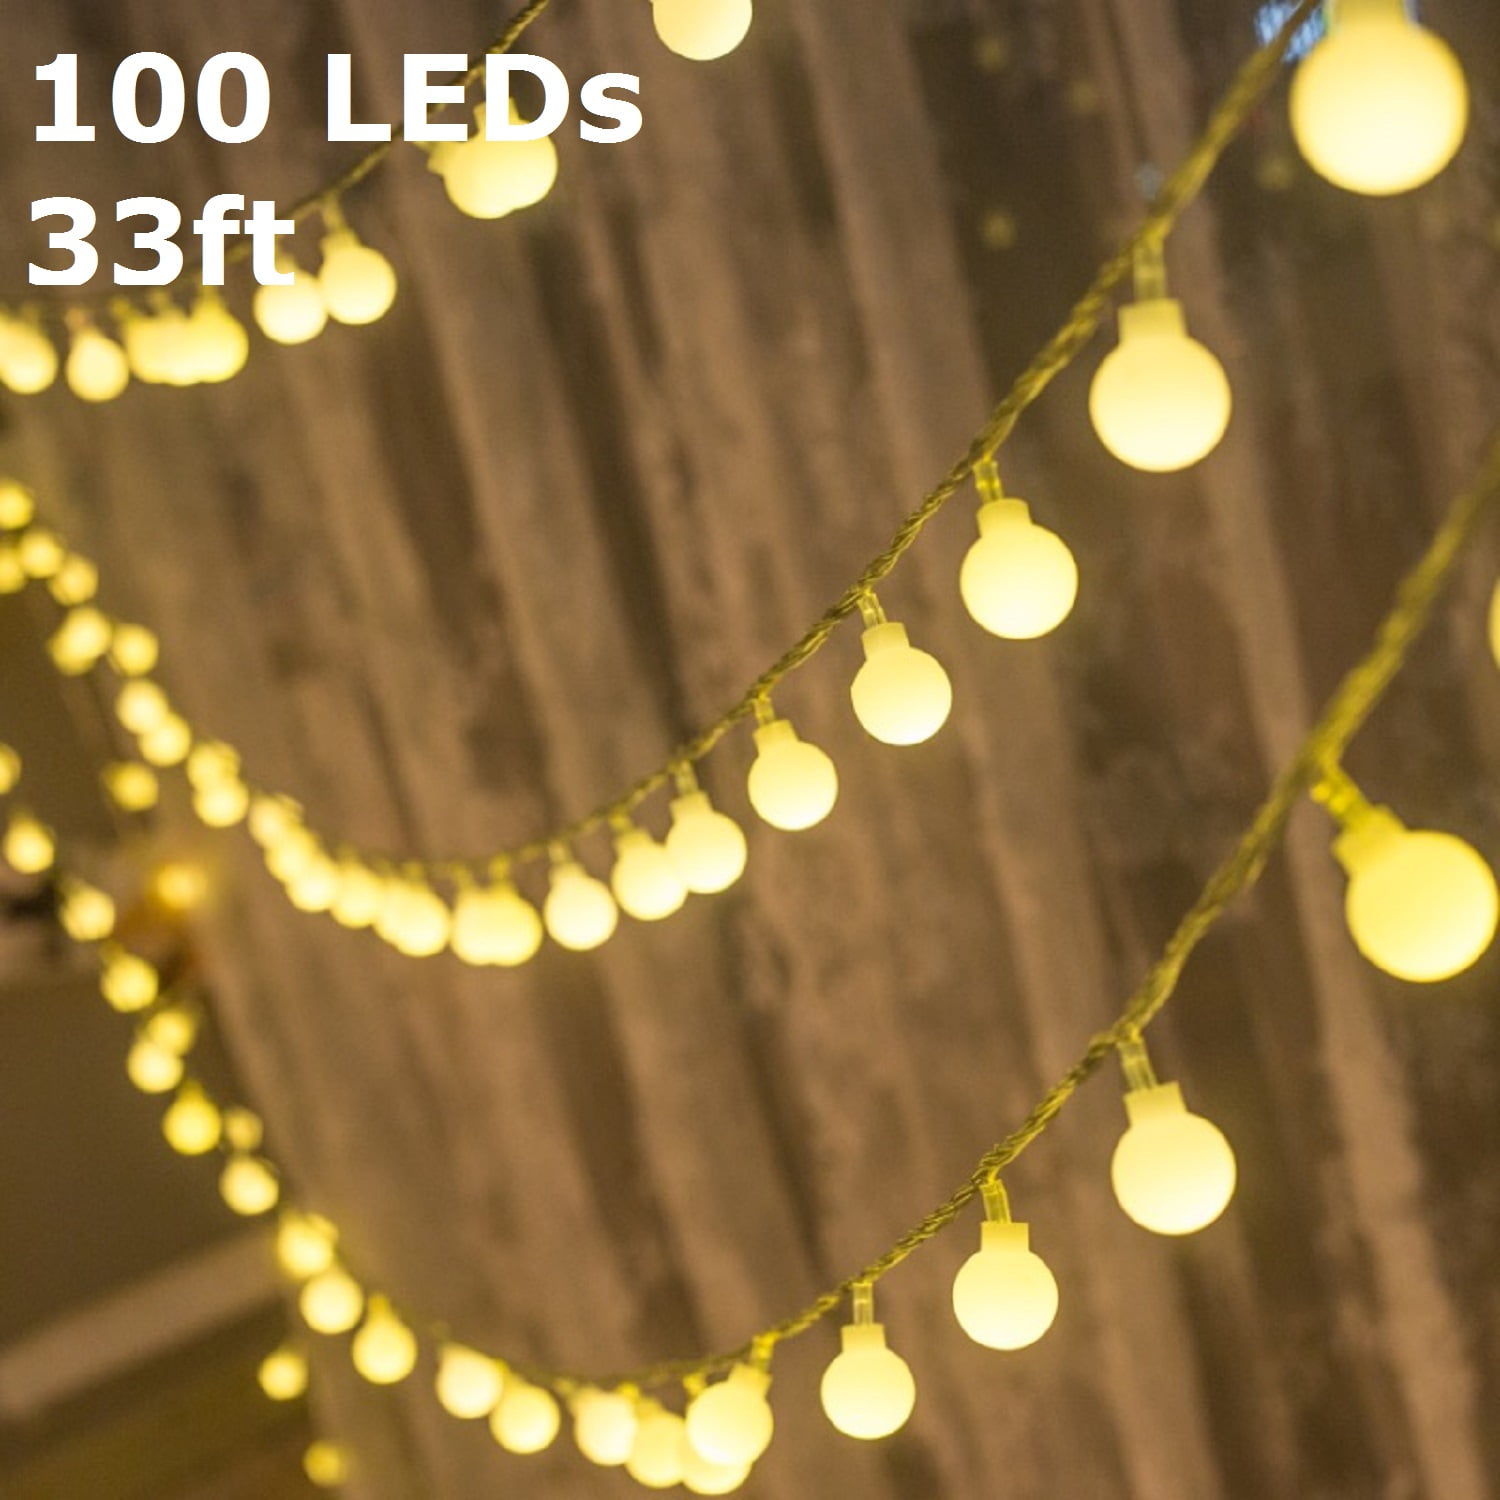 LED Fairy Lights Christmas Lights Outdoor Indoor Party Decorative Garden Balcony IP44 